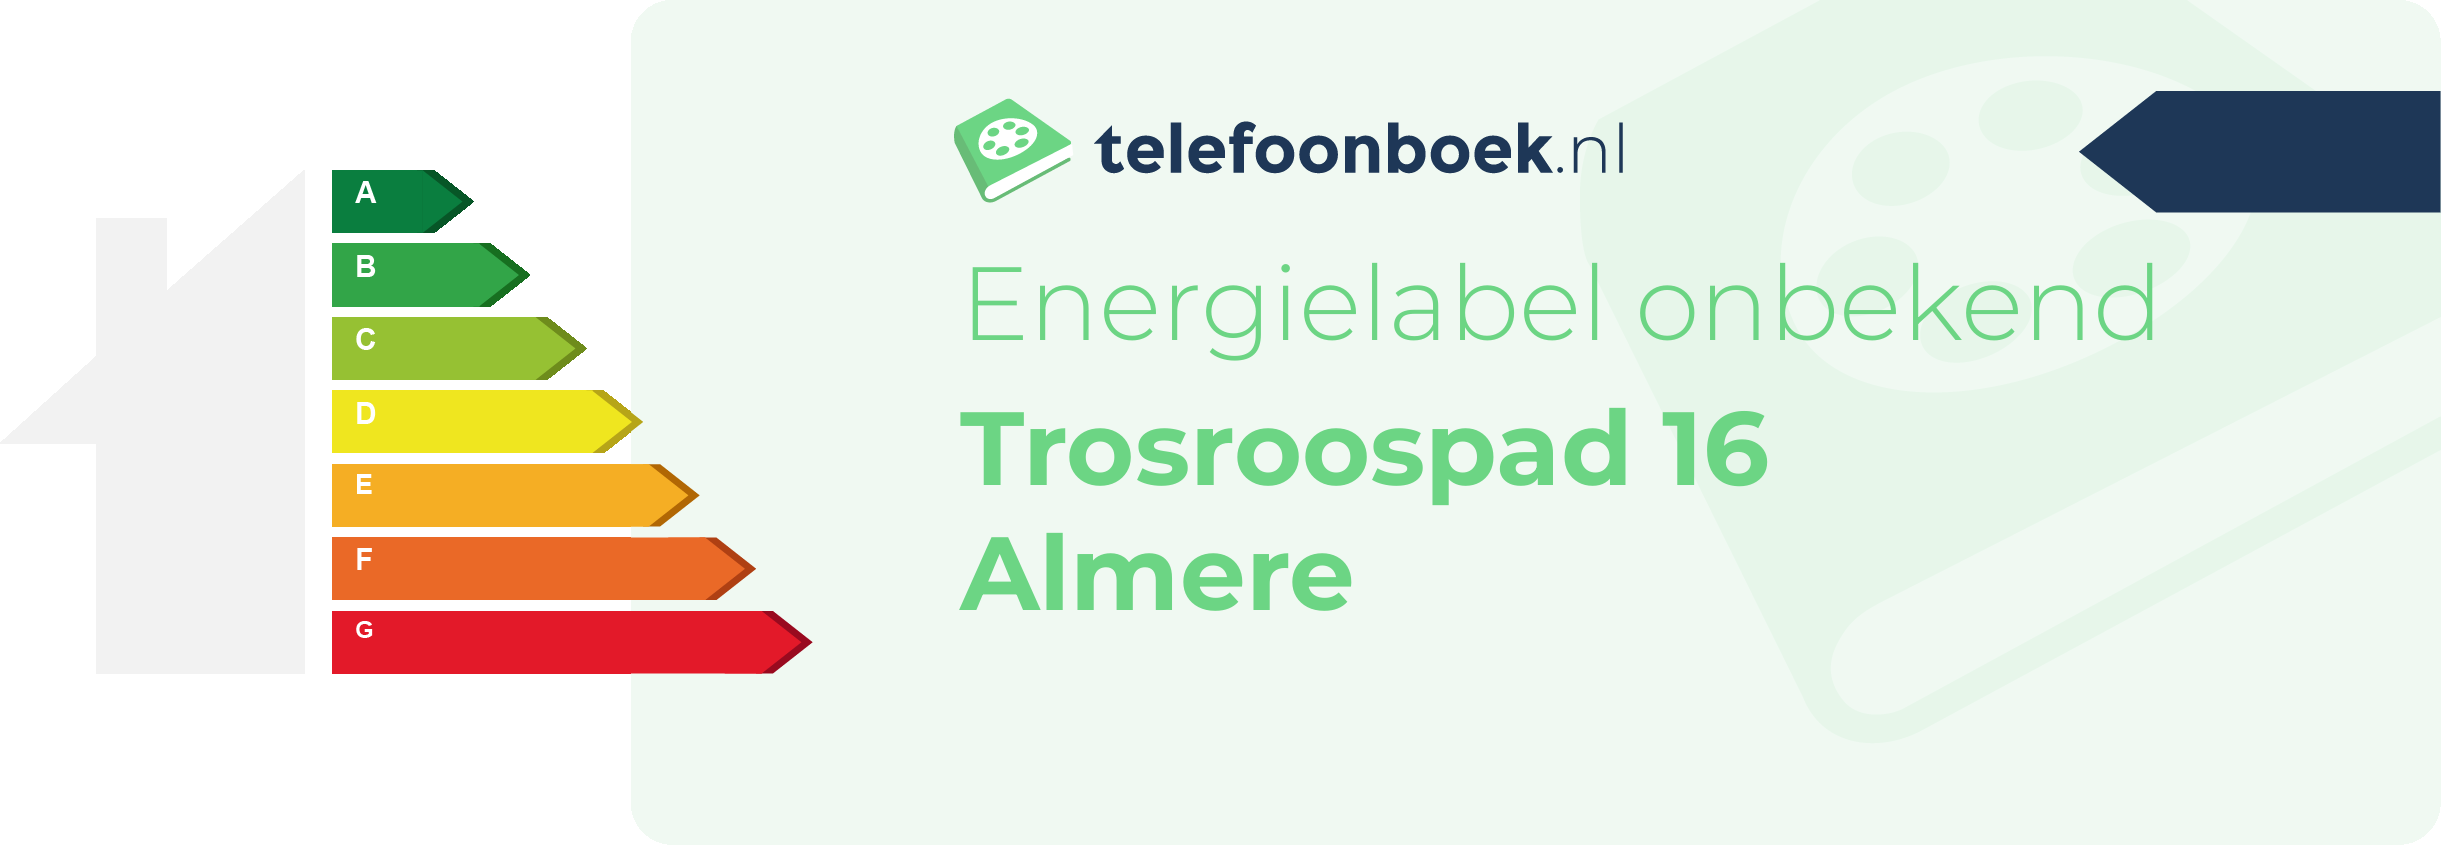 Energielabel Trosroospad 16 Almere